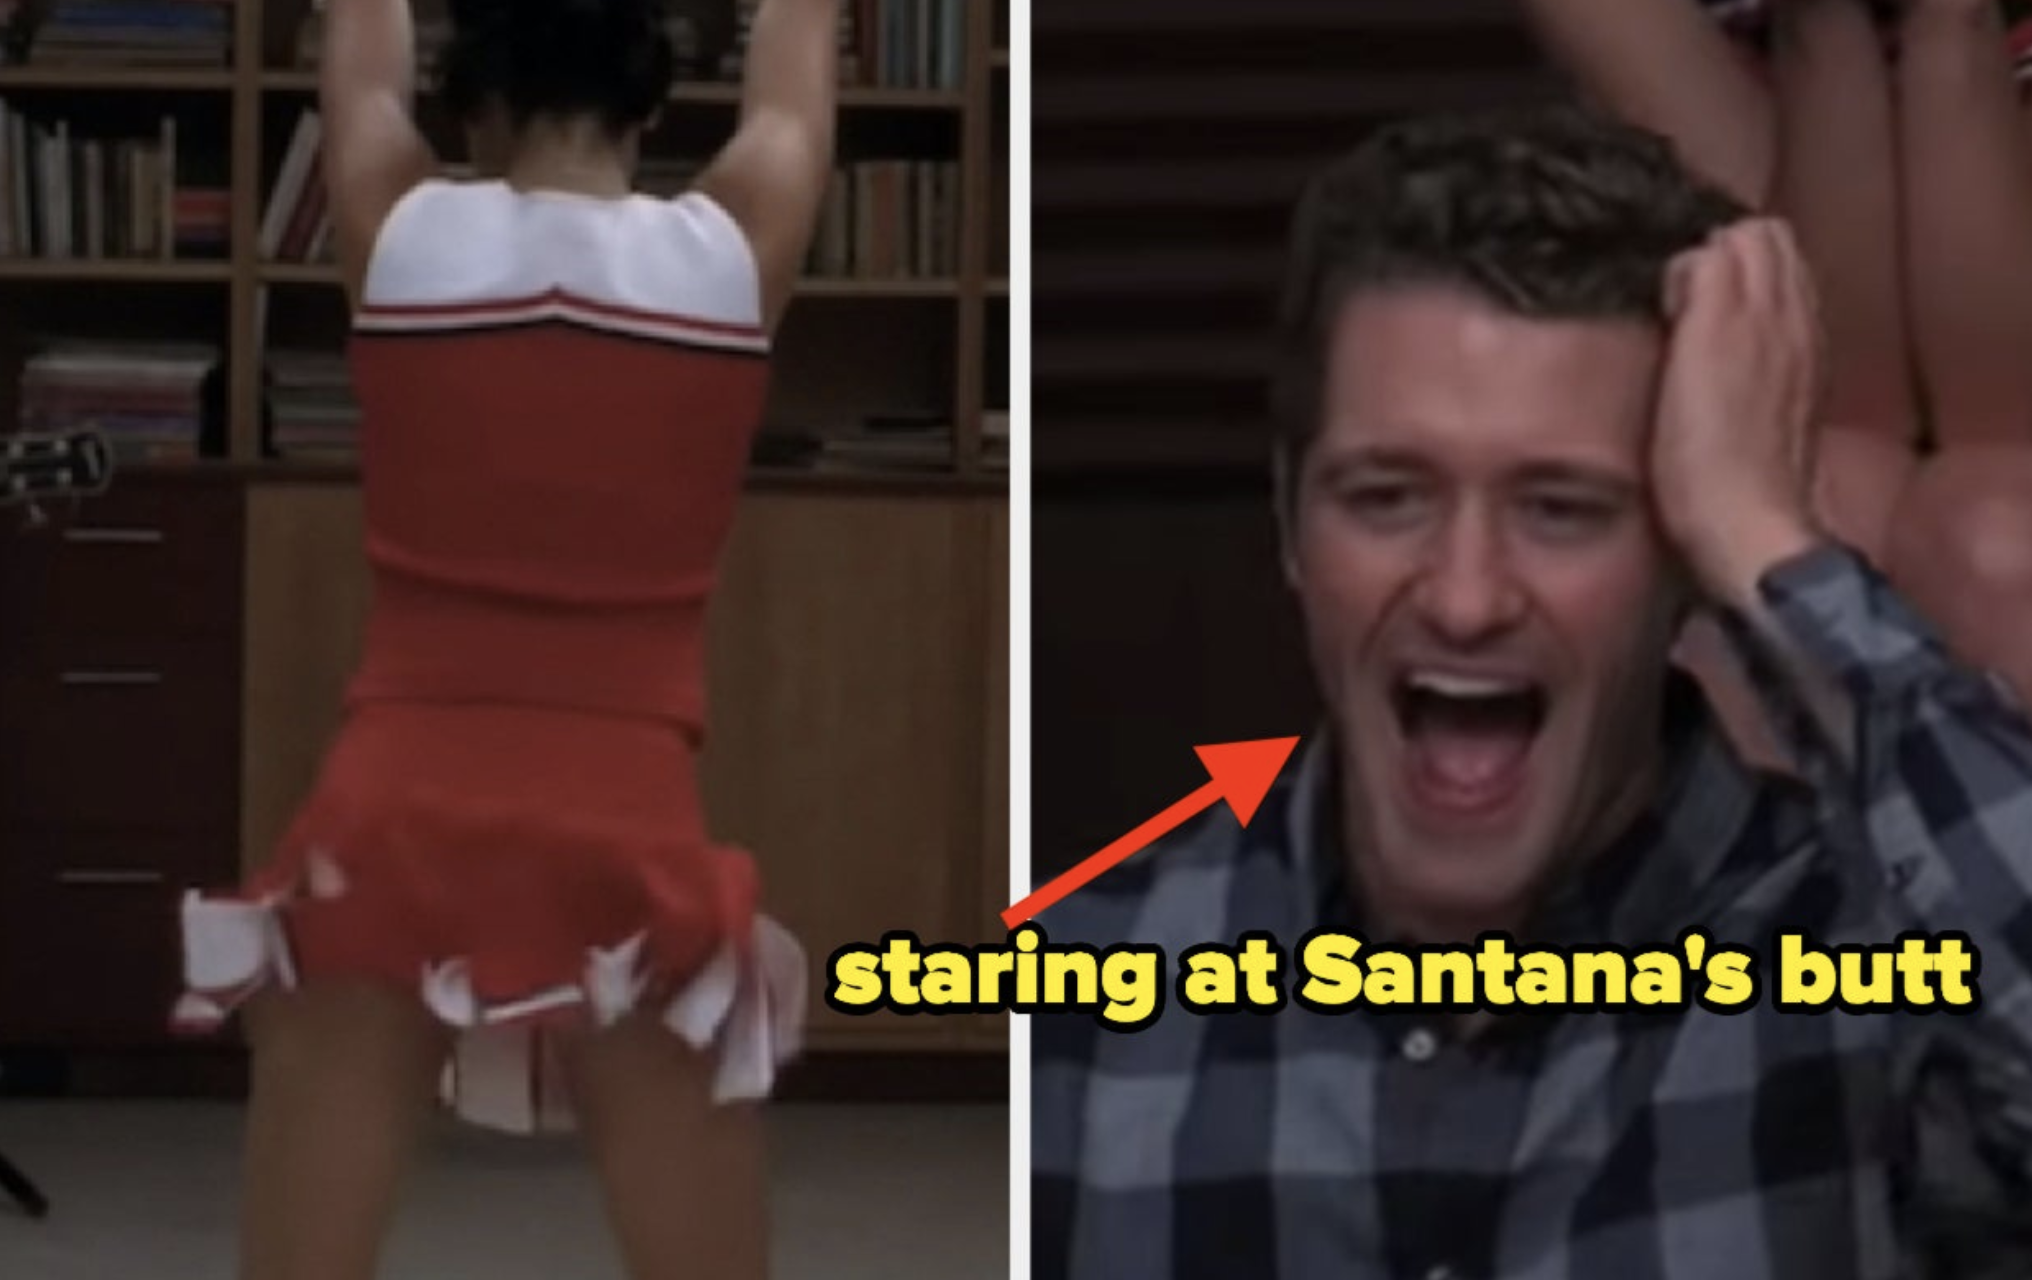 Ultimate Glee Moment (Day 7): 'Faithfully' Vs. 'Pretending,' and